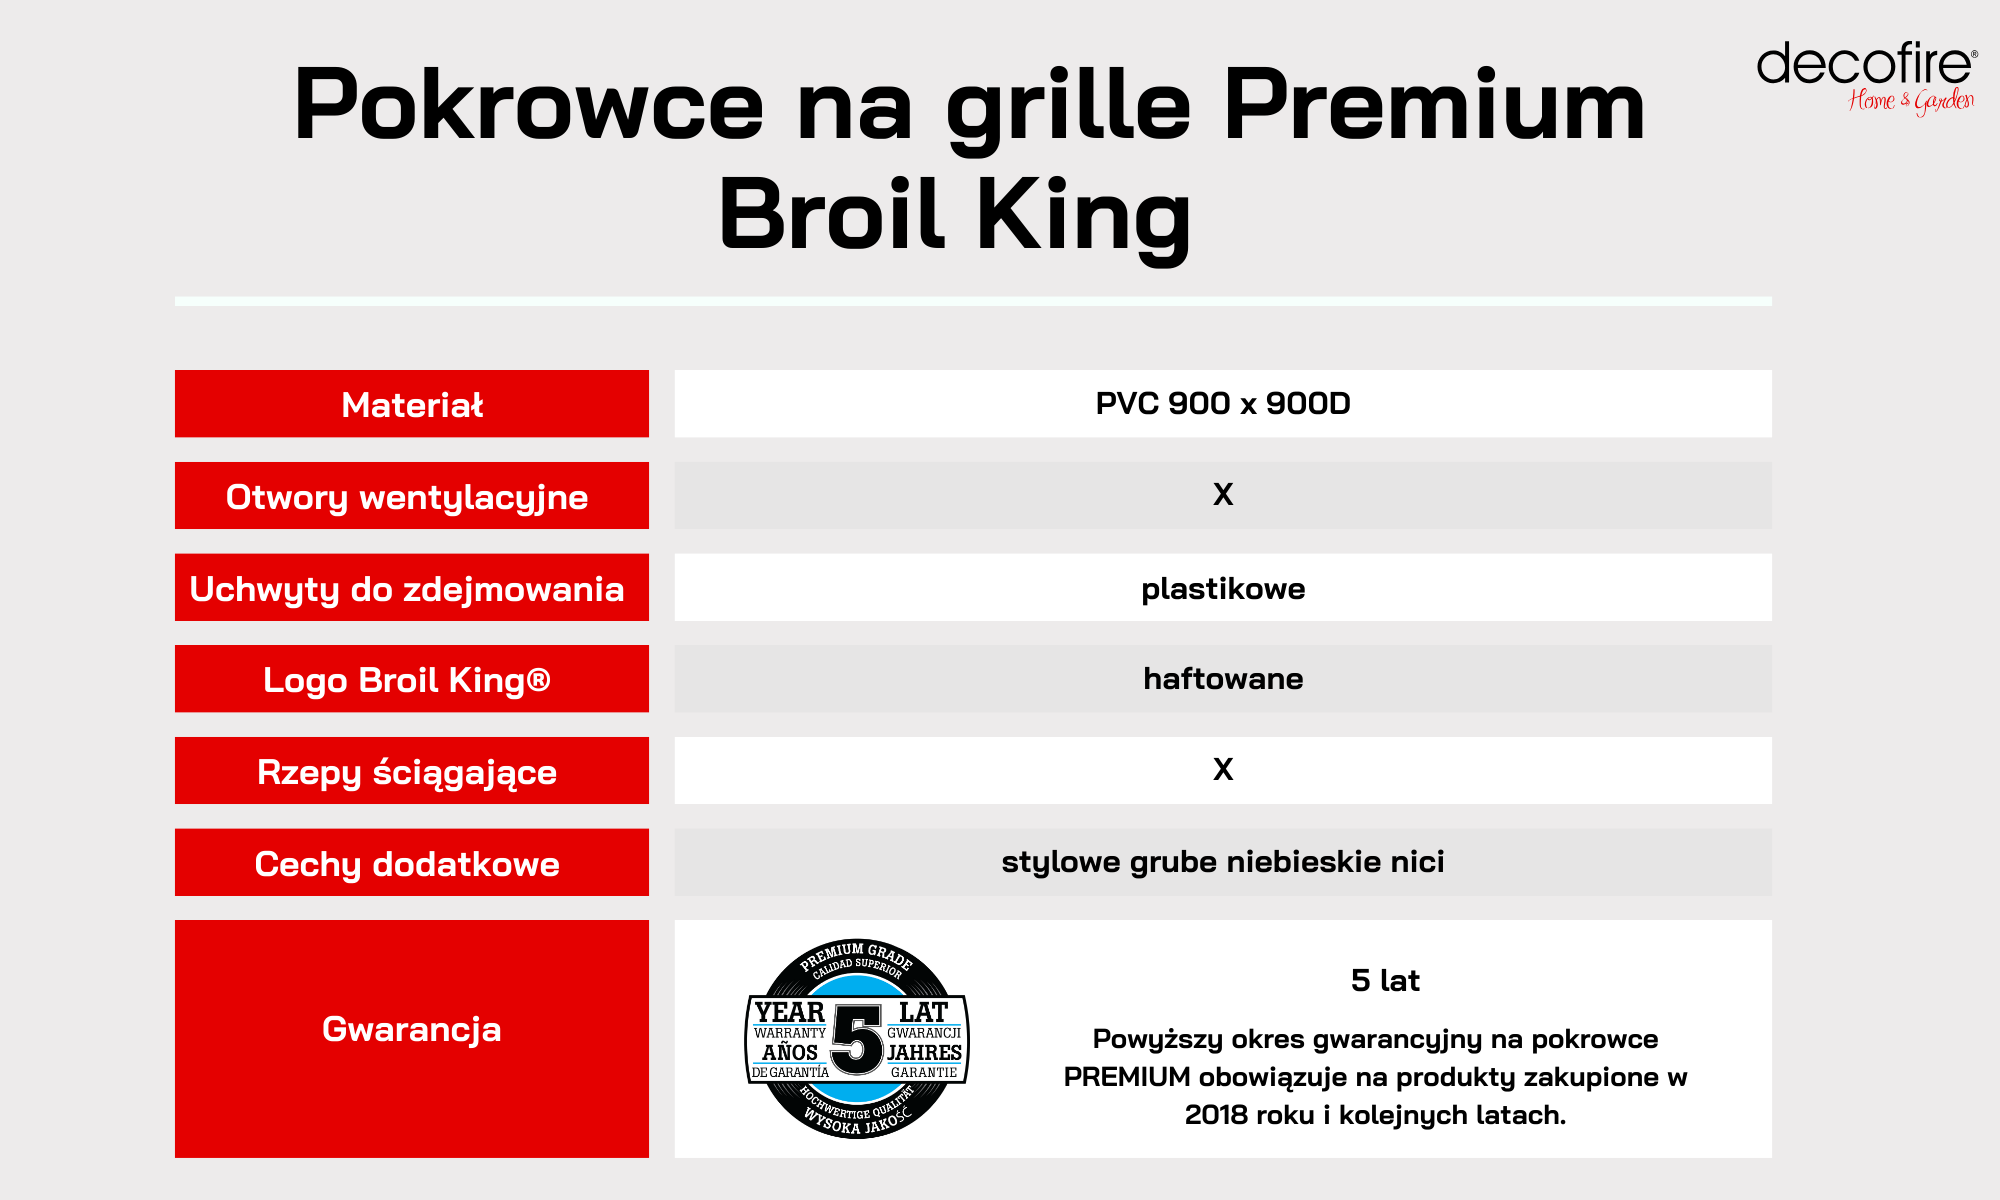 Pokrowce na grille Premium Broil King 